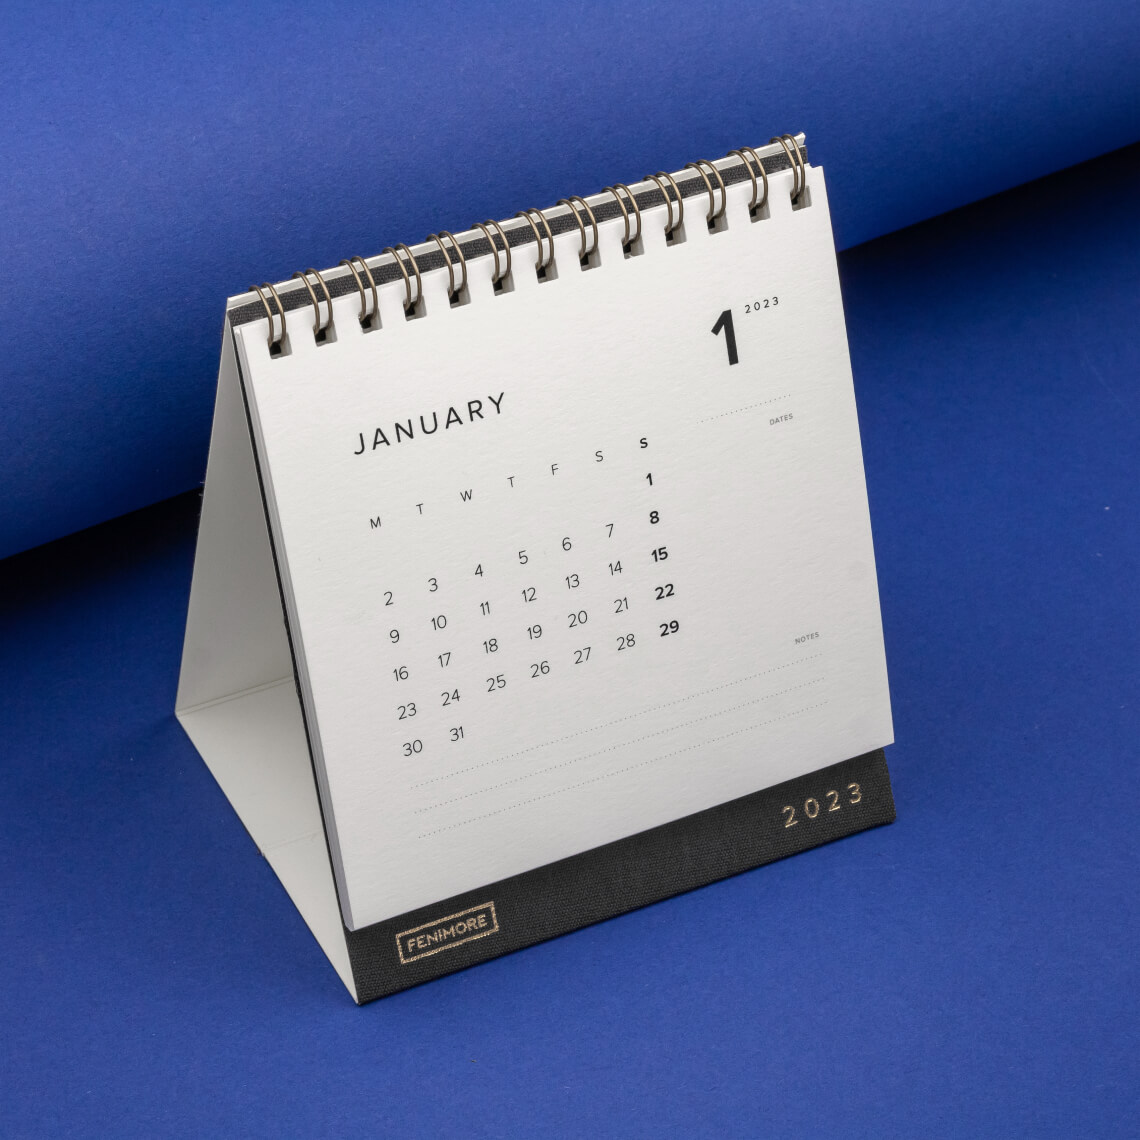 Настільний календар Fenimore Desk Calendar на 2023 рік